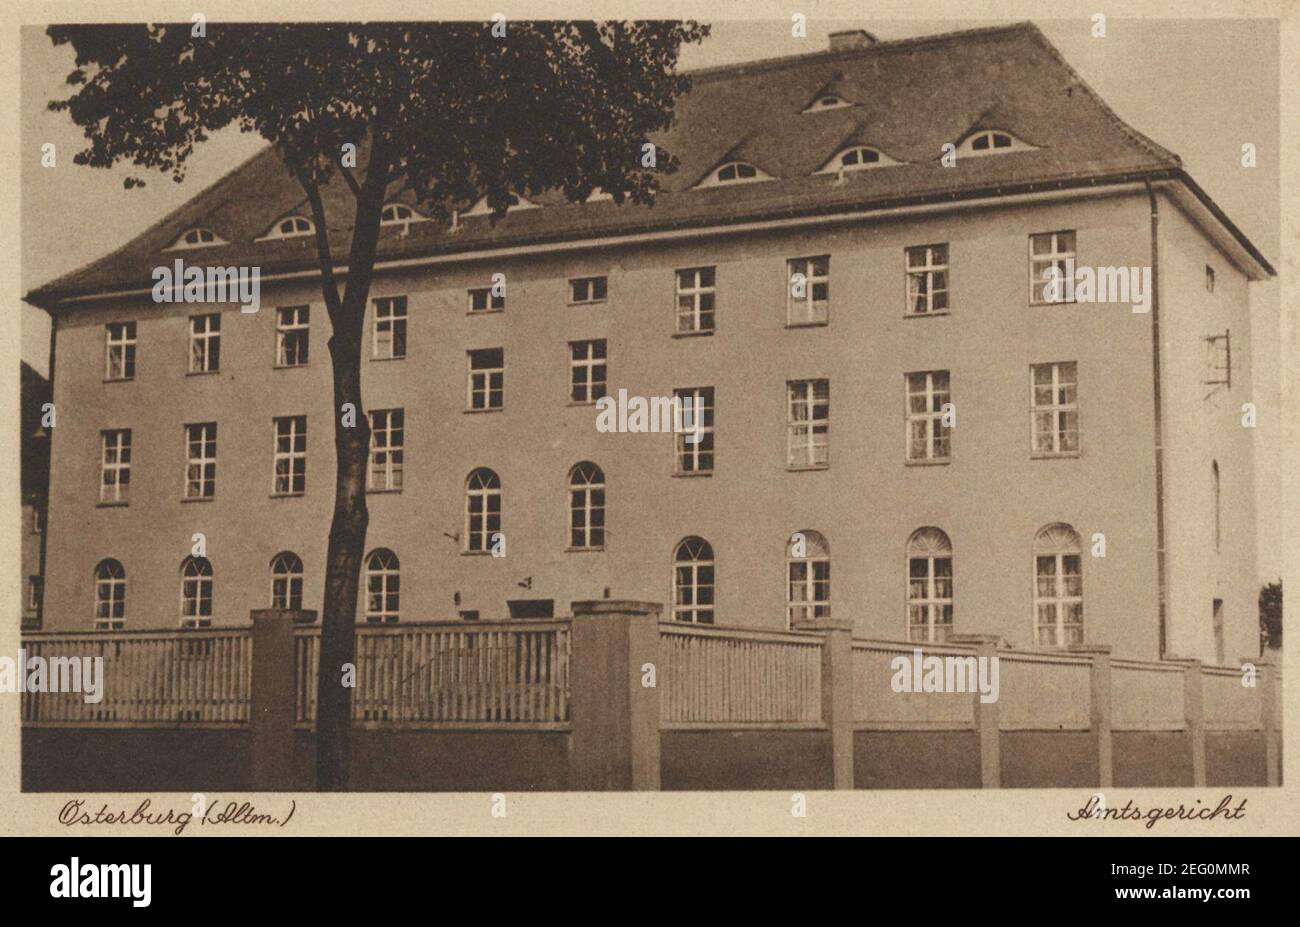 Osterburg (Altmark), Sachsen-Anhalt - Amtsgericht Stock Photo